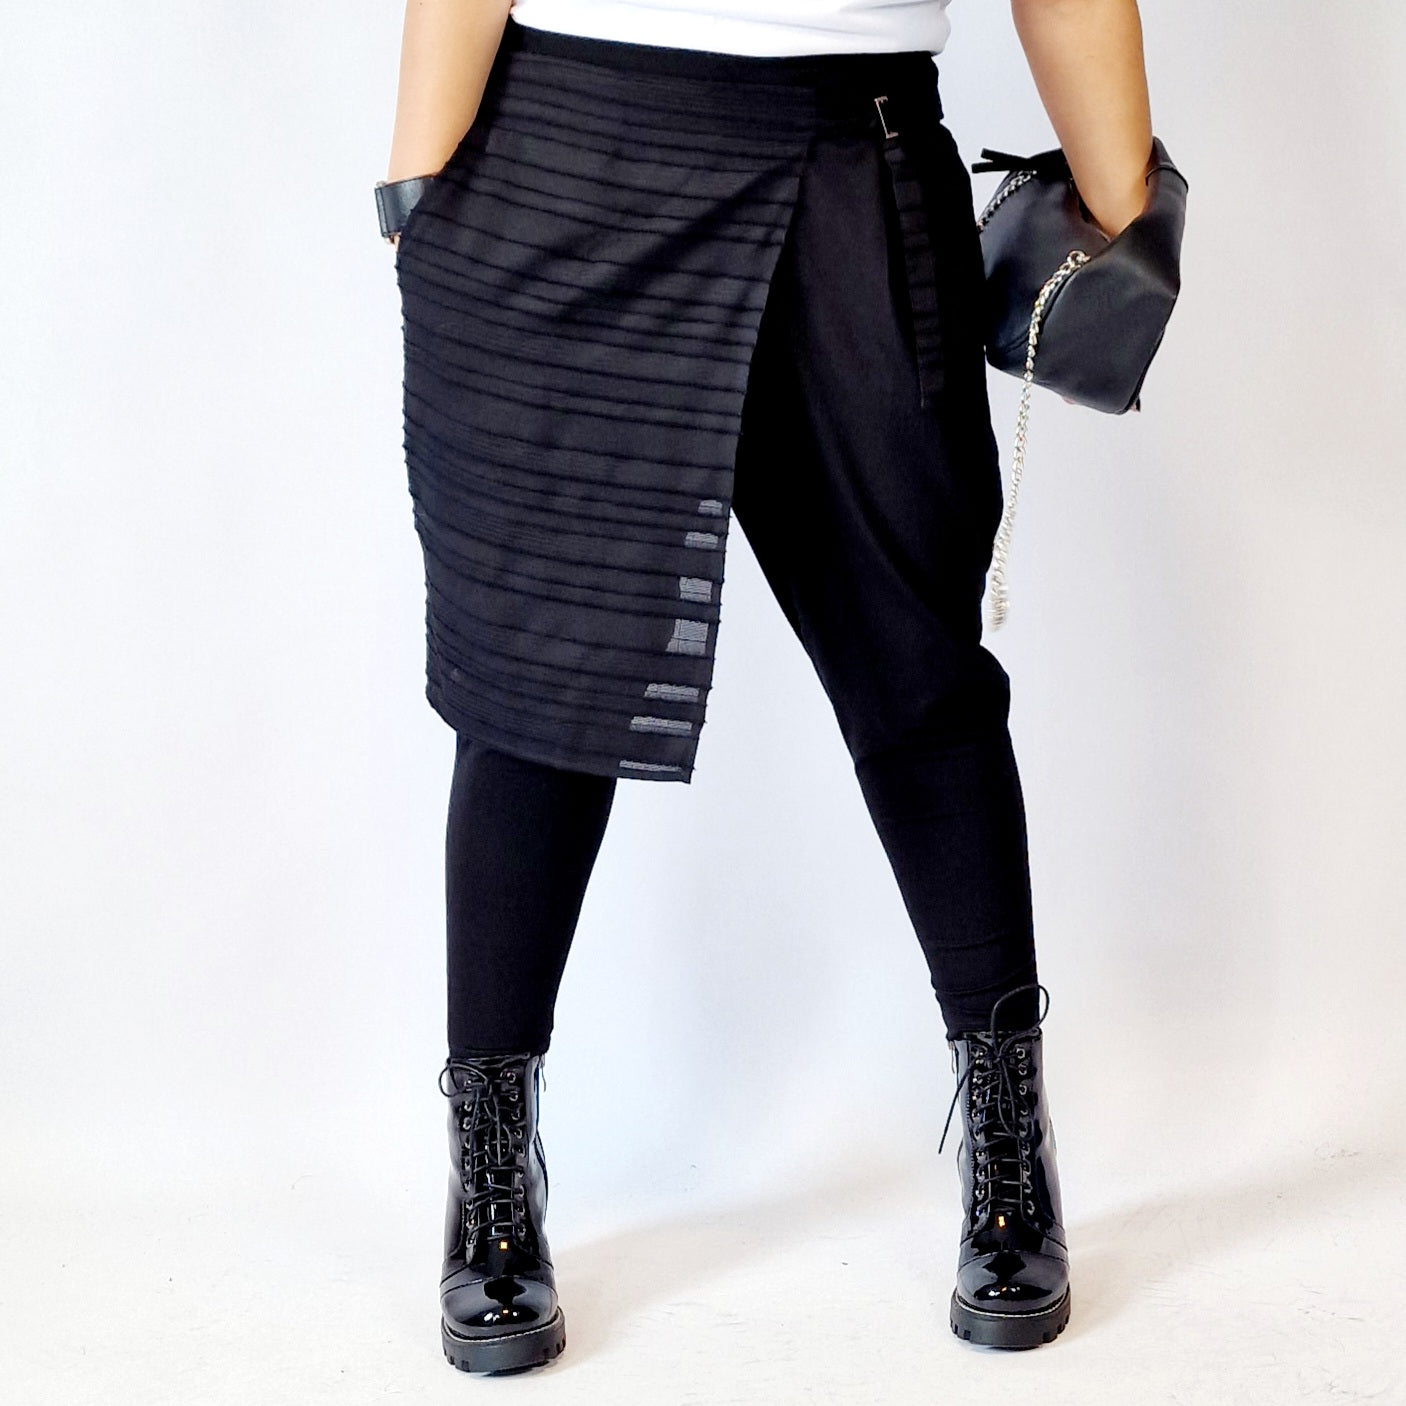 Women's summer trousers 20311 : Amazon.co.uk: Fashion